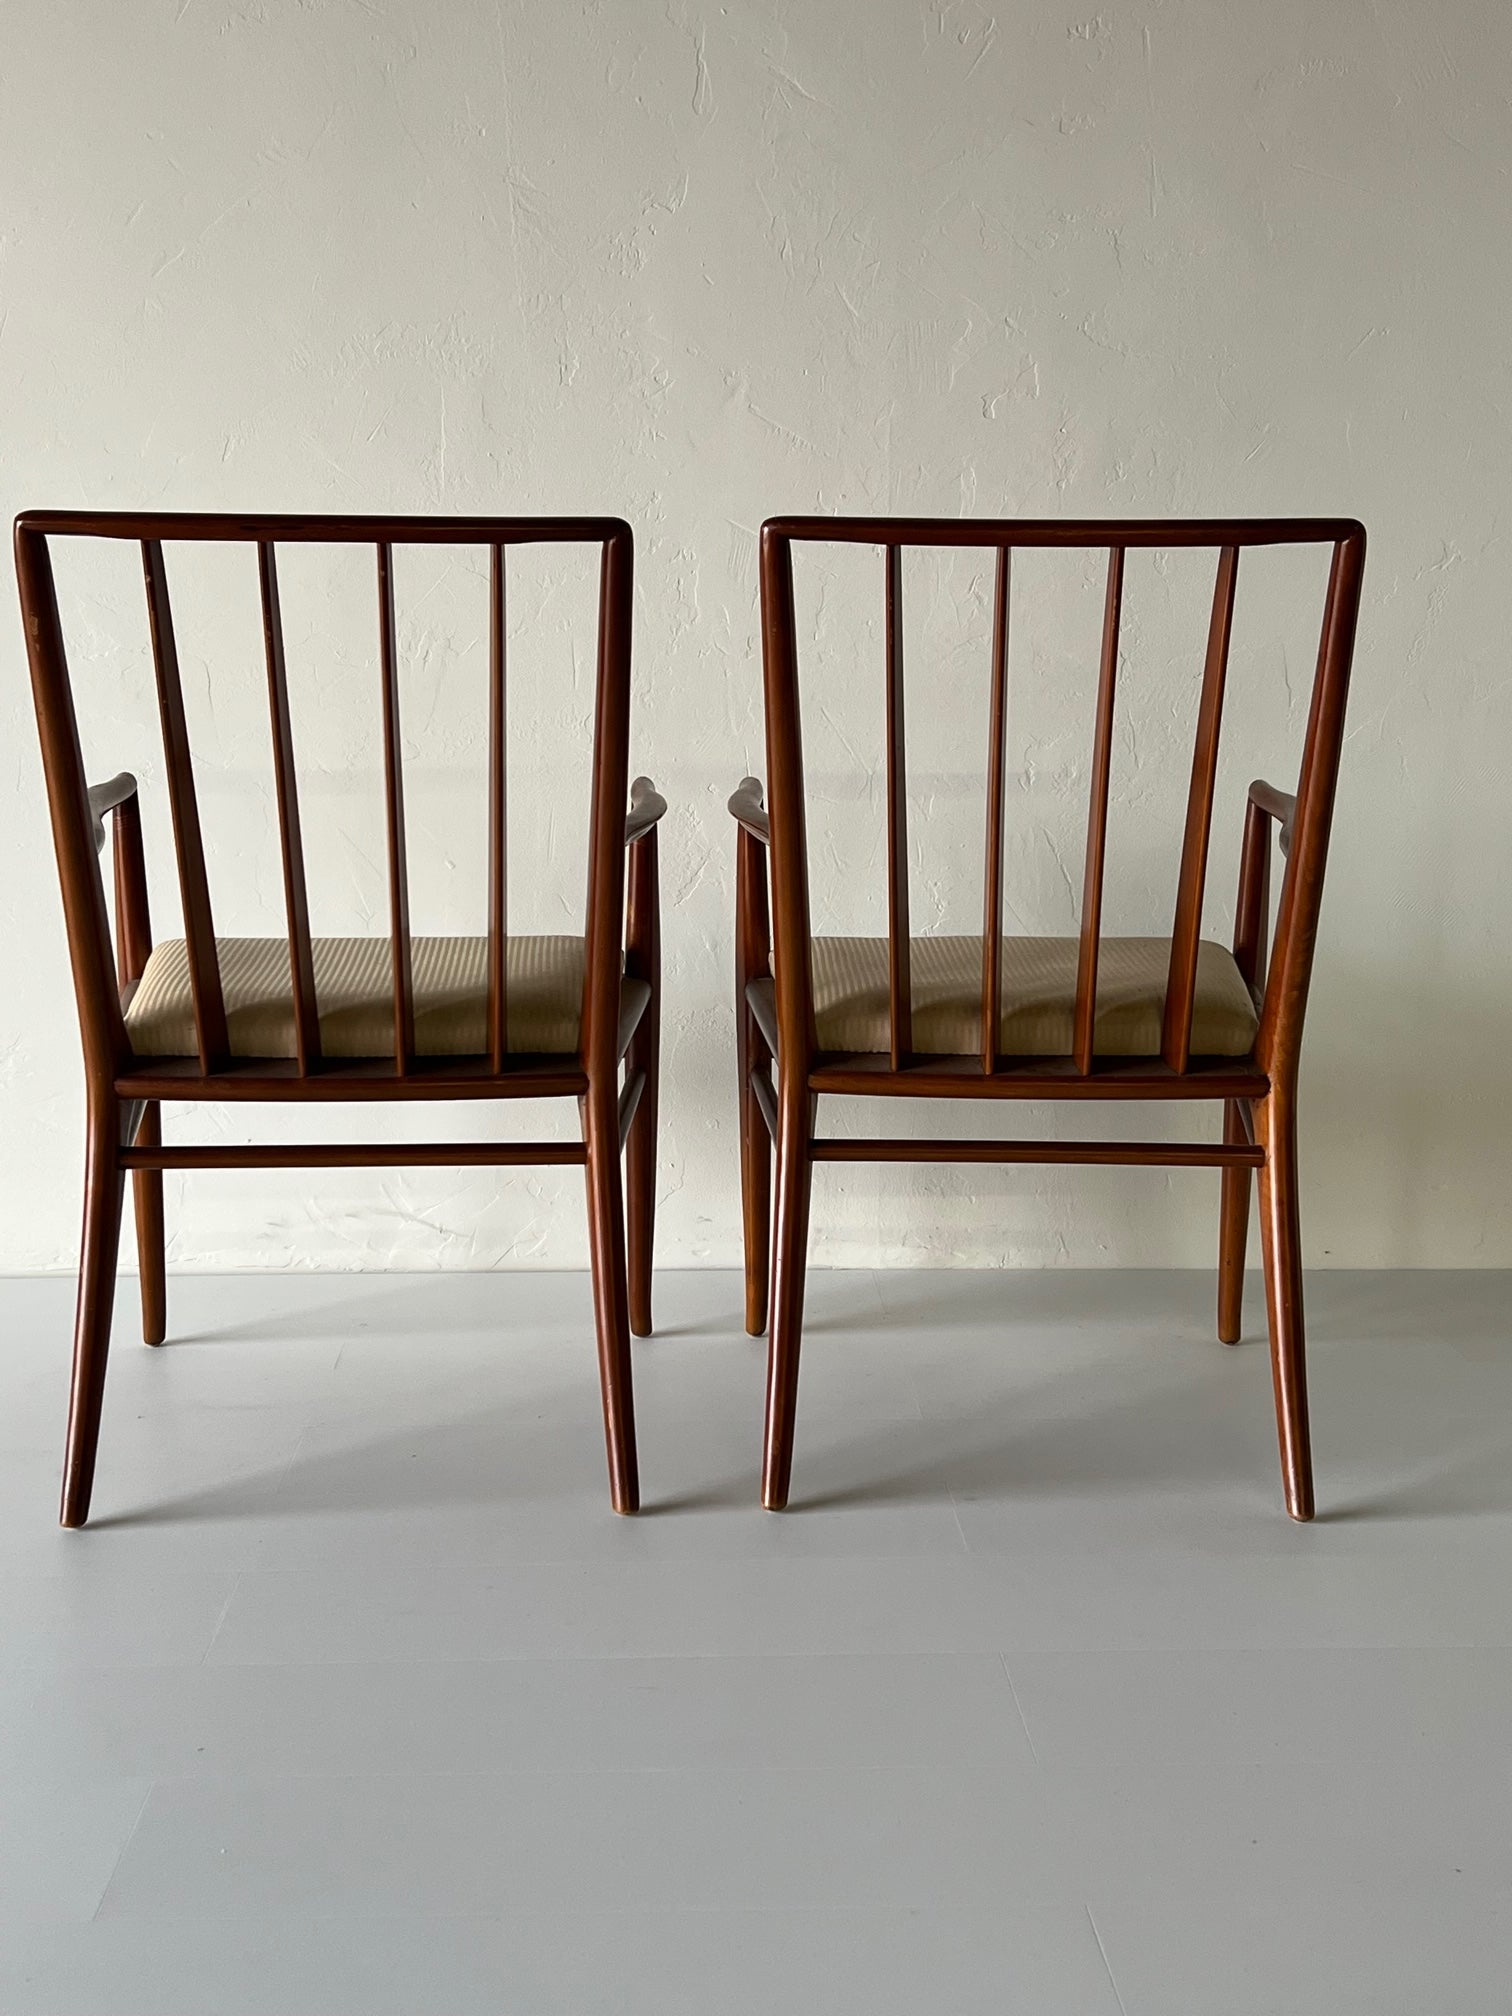 T.H. Robsjohn Gibbings for Widdicomb Arm Chairs